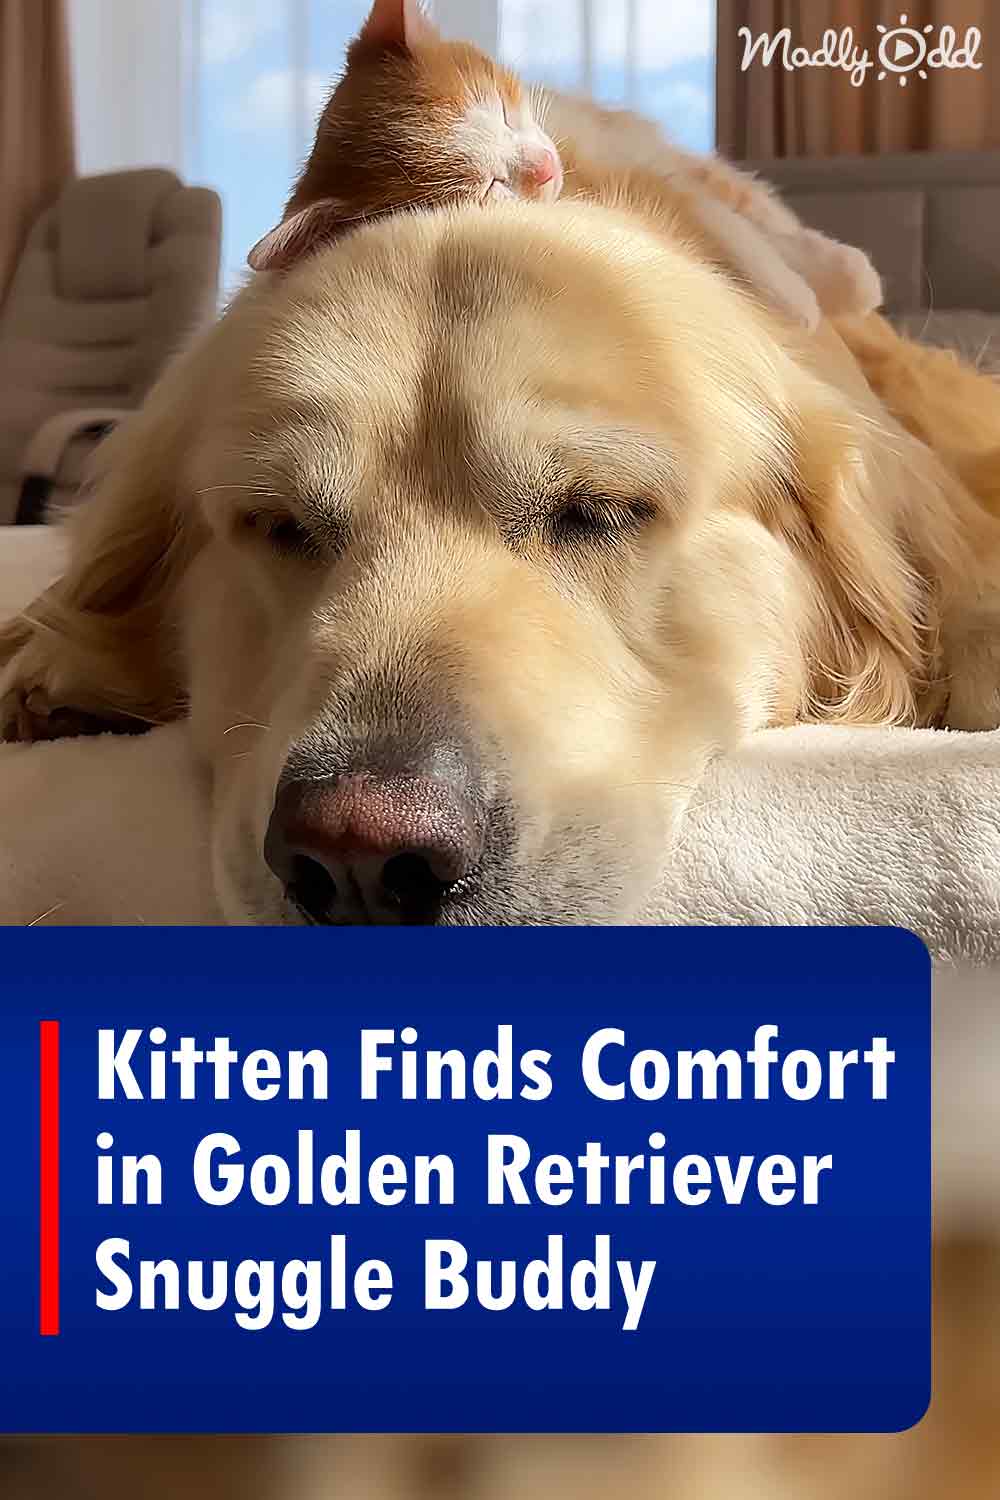 Kitten Finds Comfort in Golden Retriever Snuggle Buddy